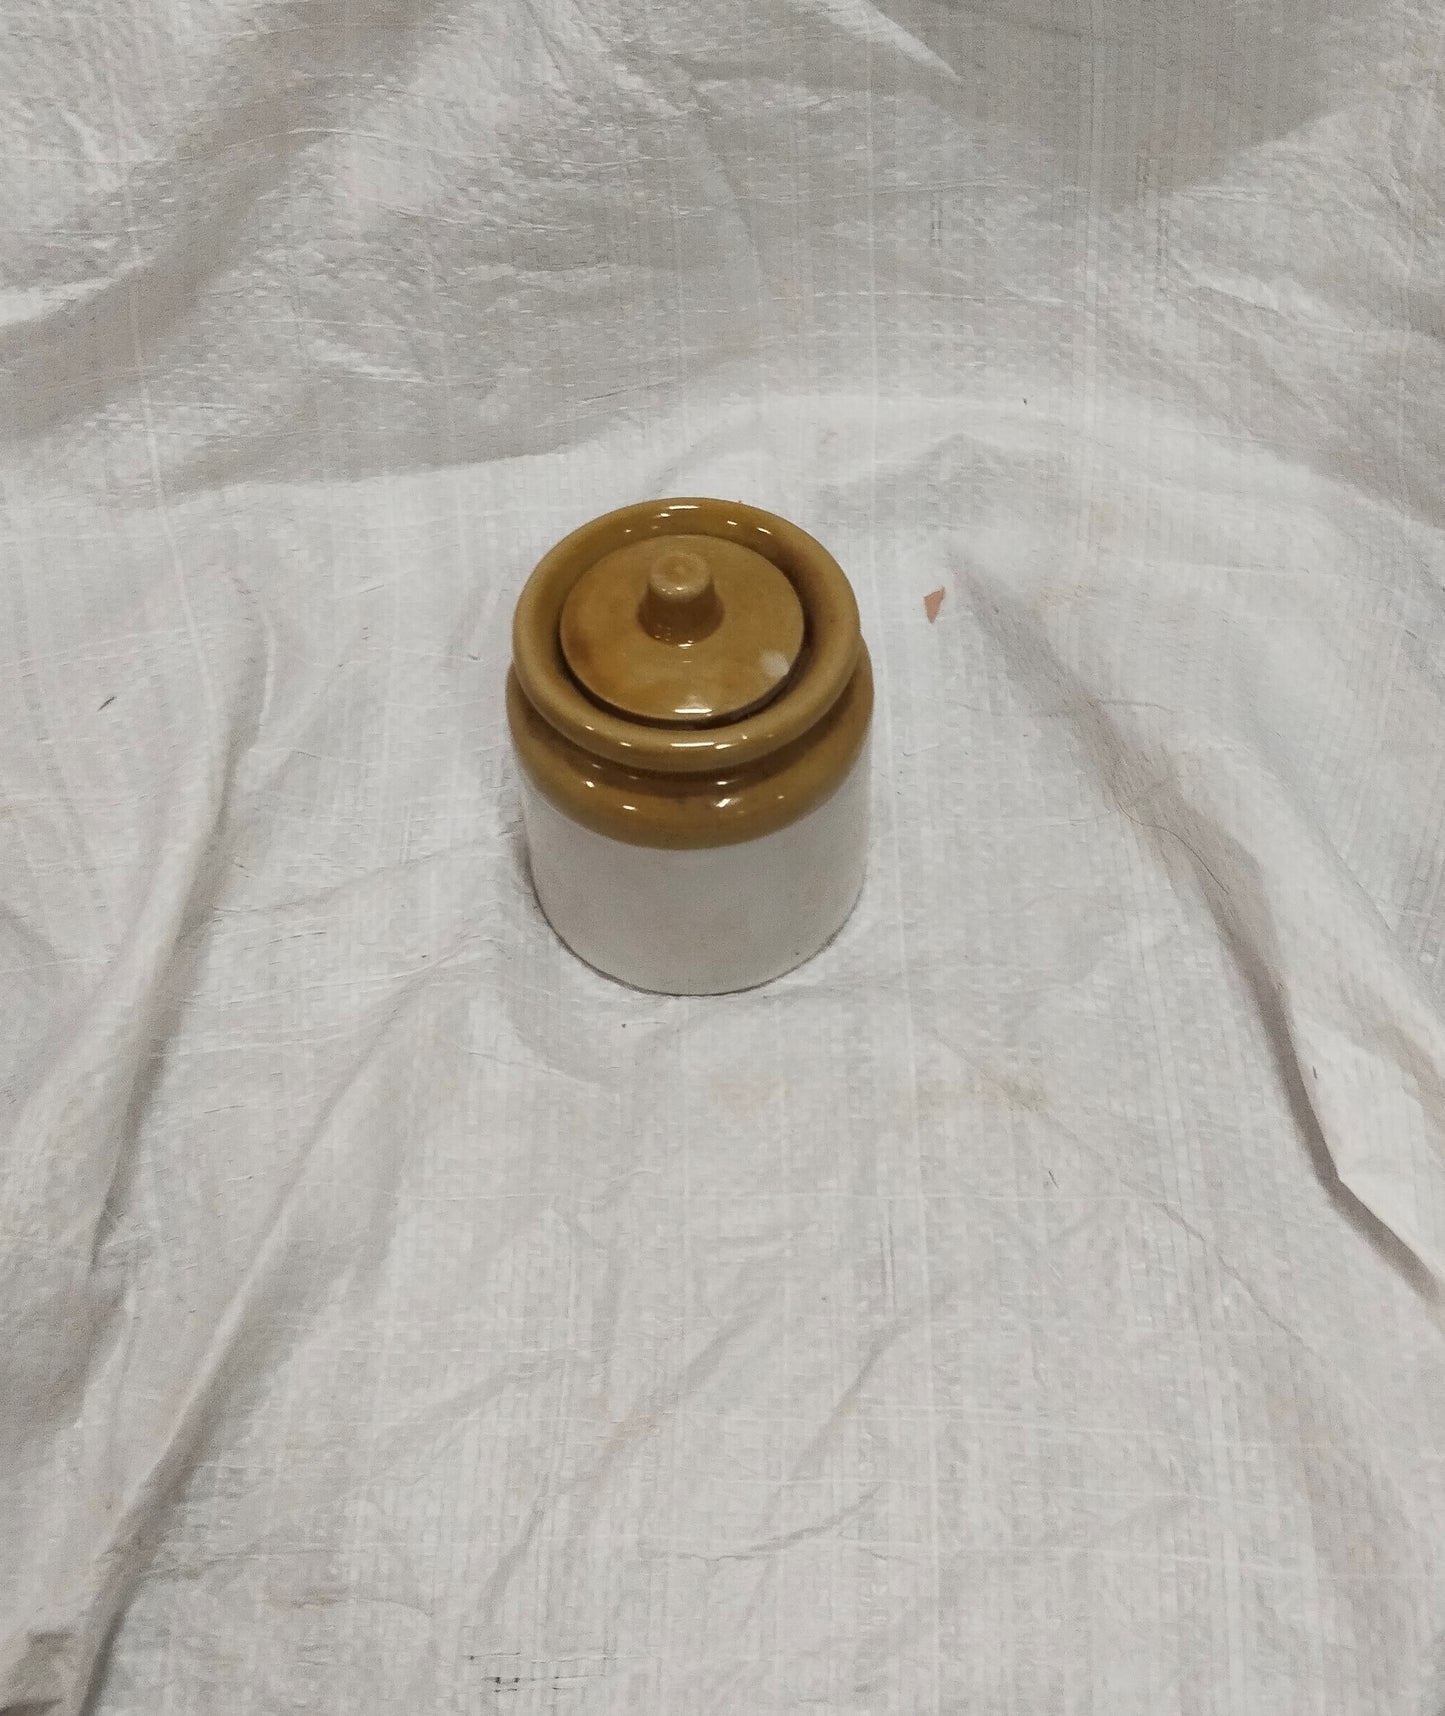 Indian Handmade Ceramic Pickle Jar With Lid/Achar Barni - 4" Height